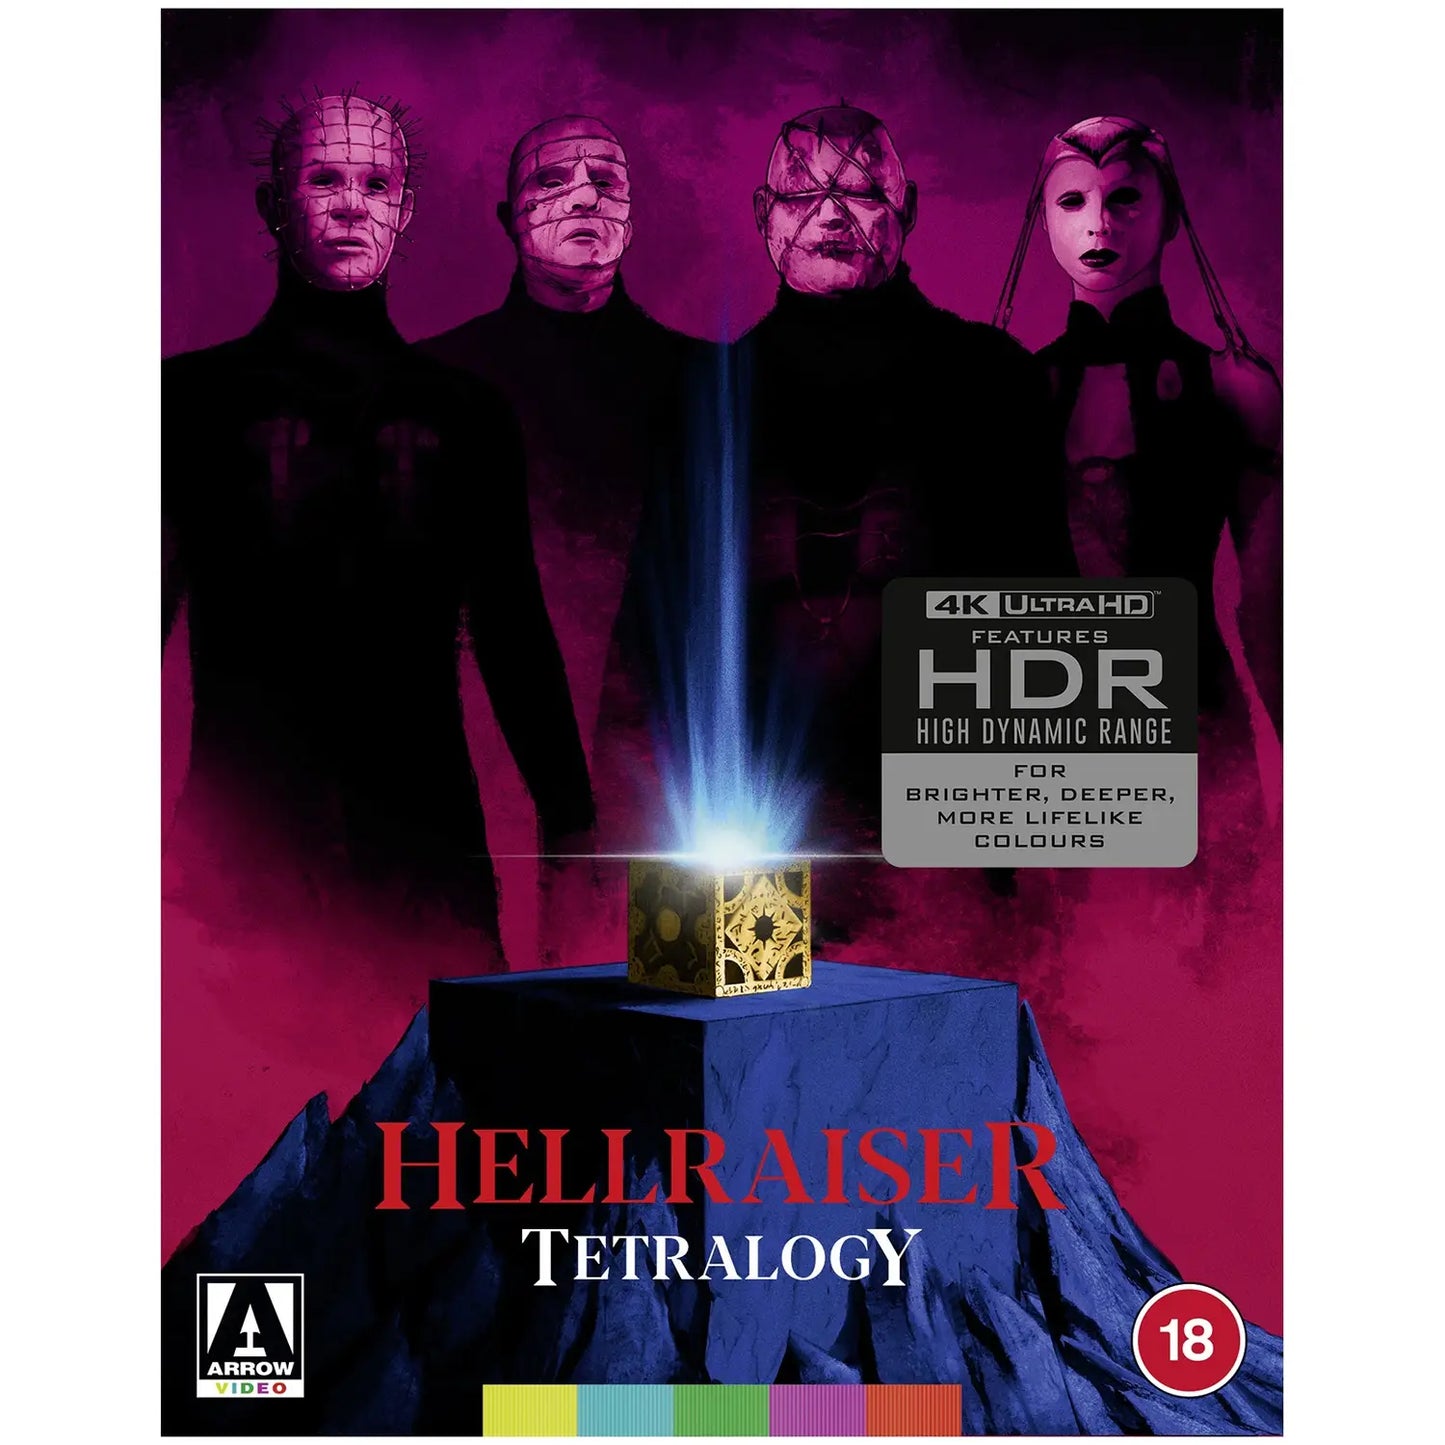 Hellraiser Tetralogy 4K UHD (Arrow UK/Region Free)